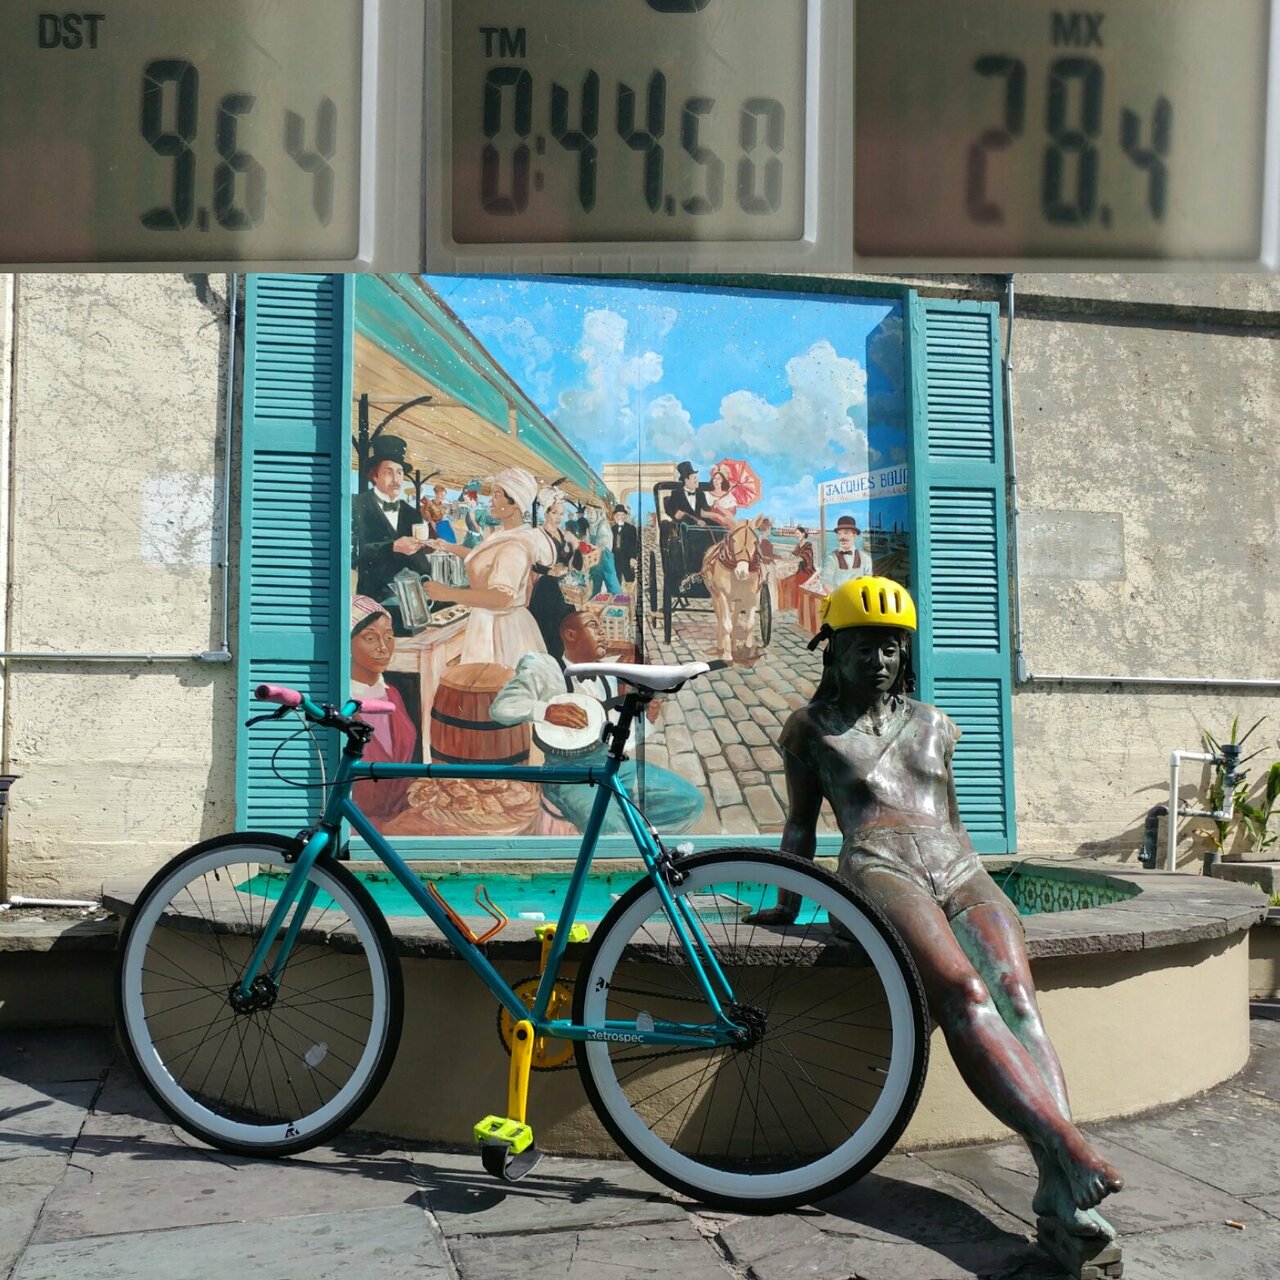 2 Day #s 9.64 miles⏰ 44min.Top speed 28.4mph#bicycle #exercise #streetart #bananasocialmedia #neworleans #nola https://t.co/7Gue6AW3cb